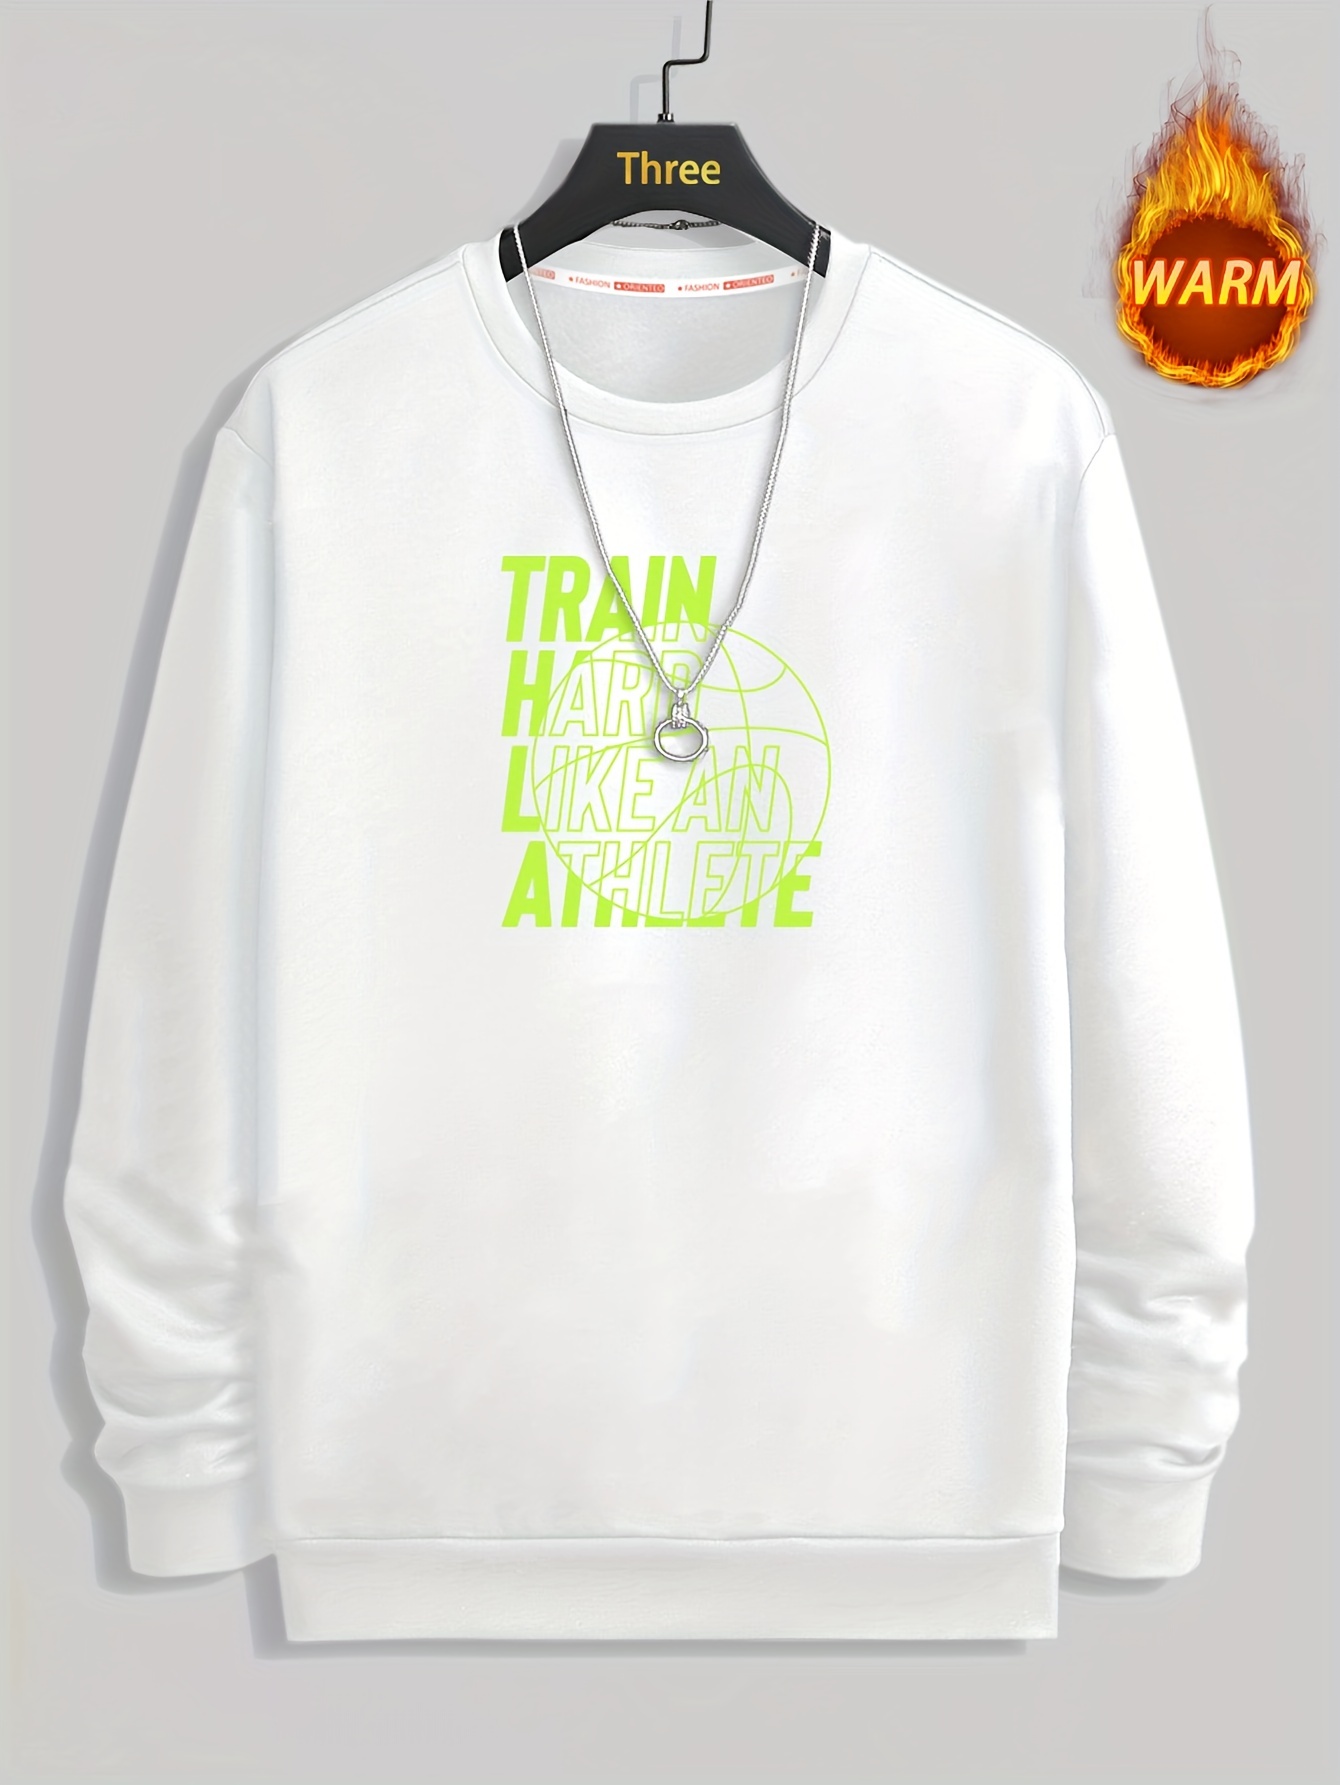 Basketball Tee Shirts, Basketball Graphic Design Fashion Sweatshirt